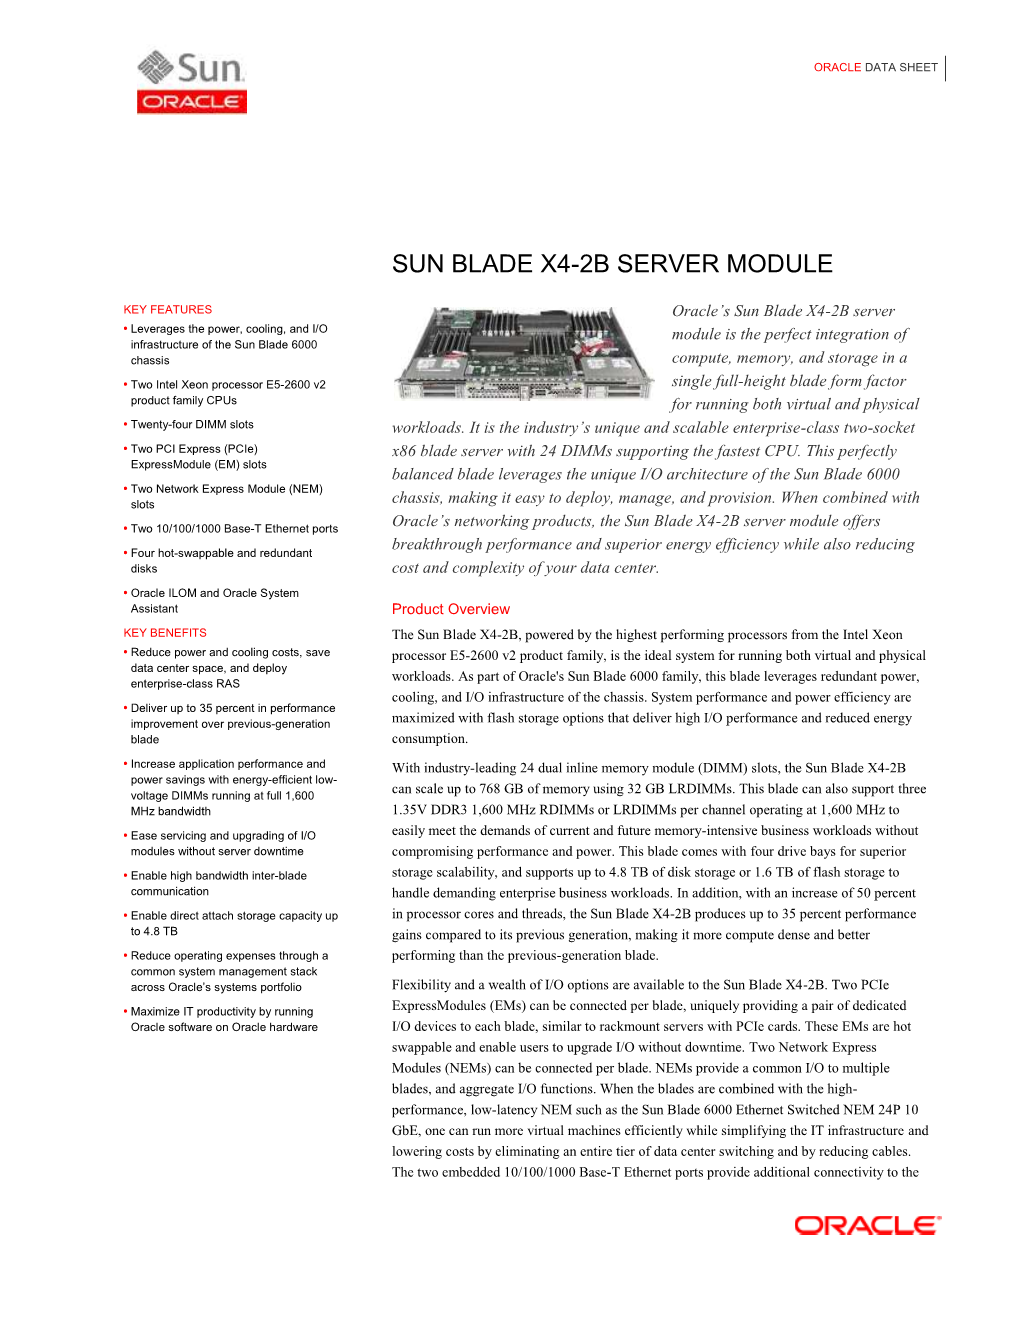 Sun Blade X4-2B Server Module